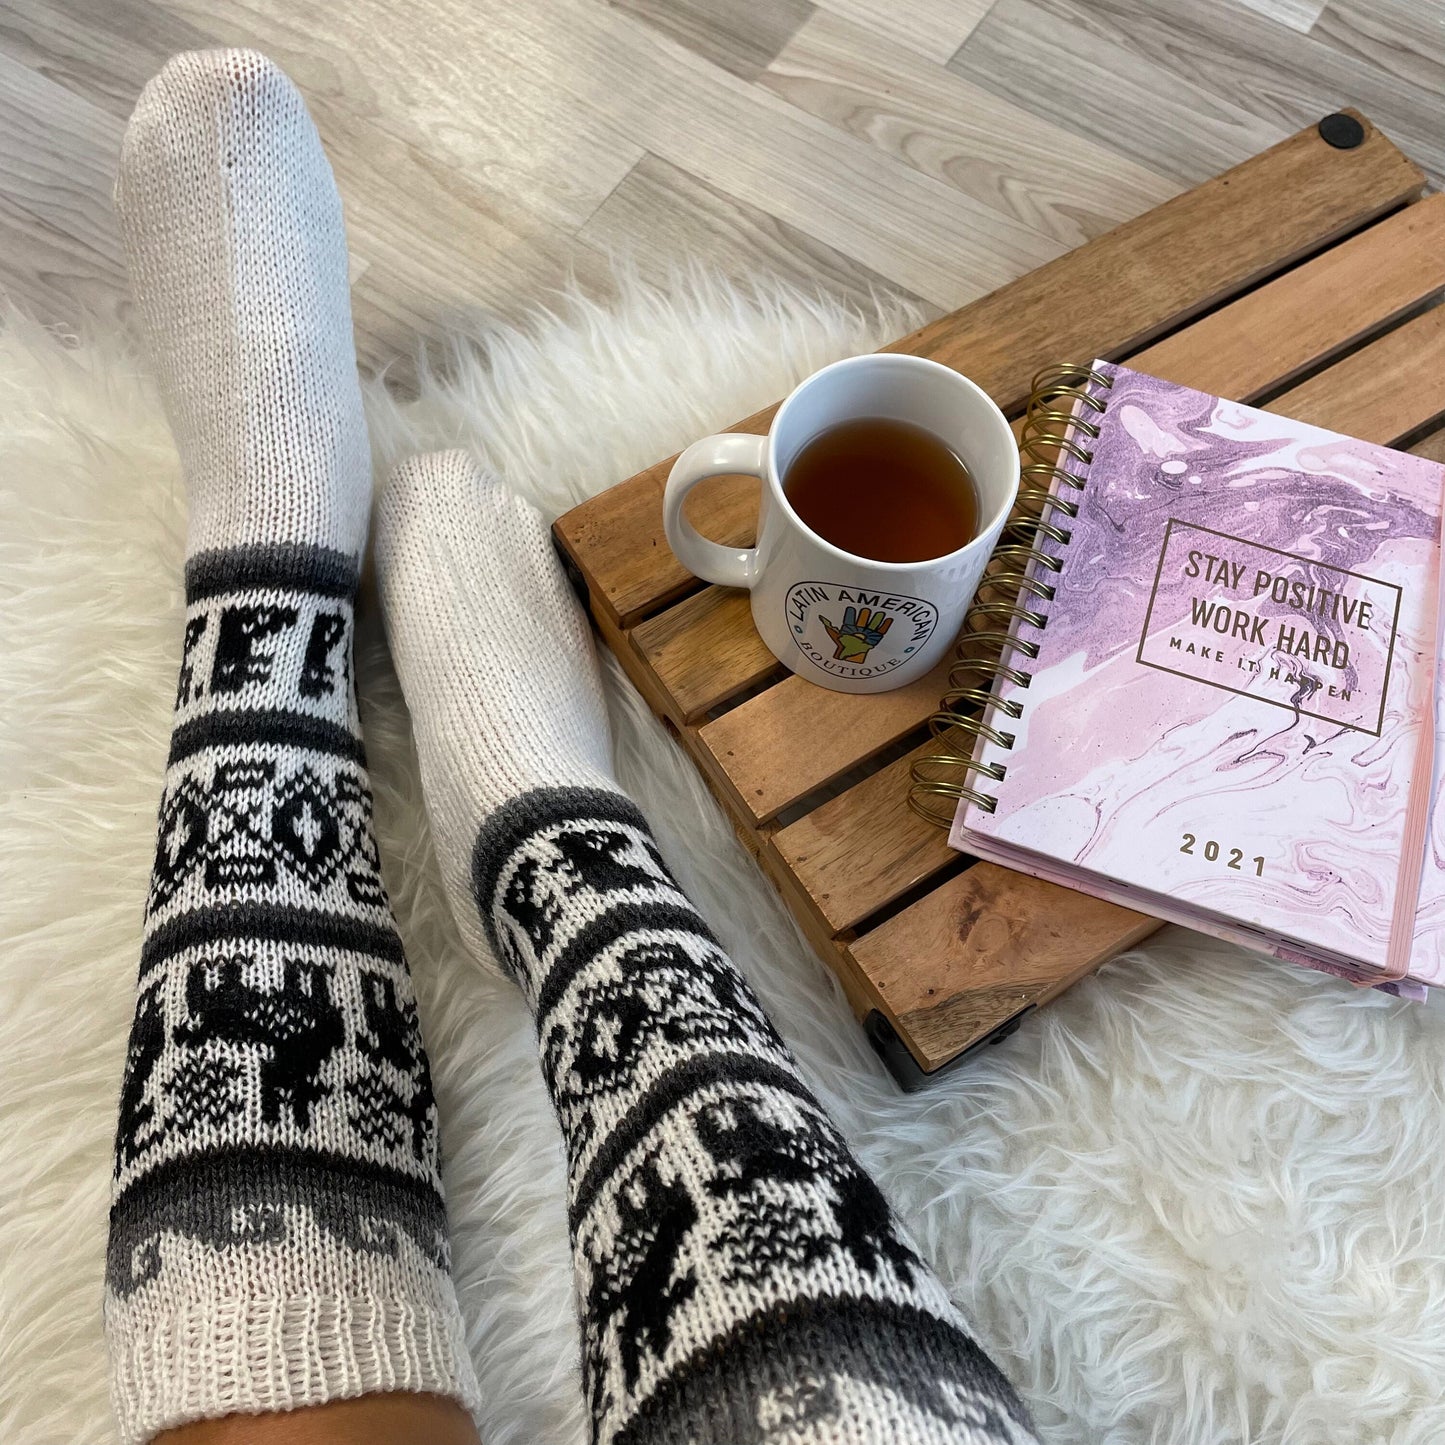 Warm Soft Winter Socks | Long Boot Socks | Natural Colors | Size 6-8 US Adult